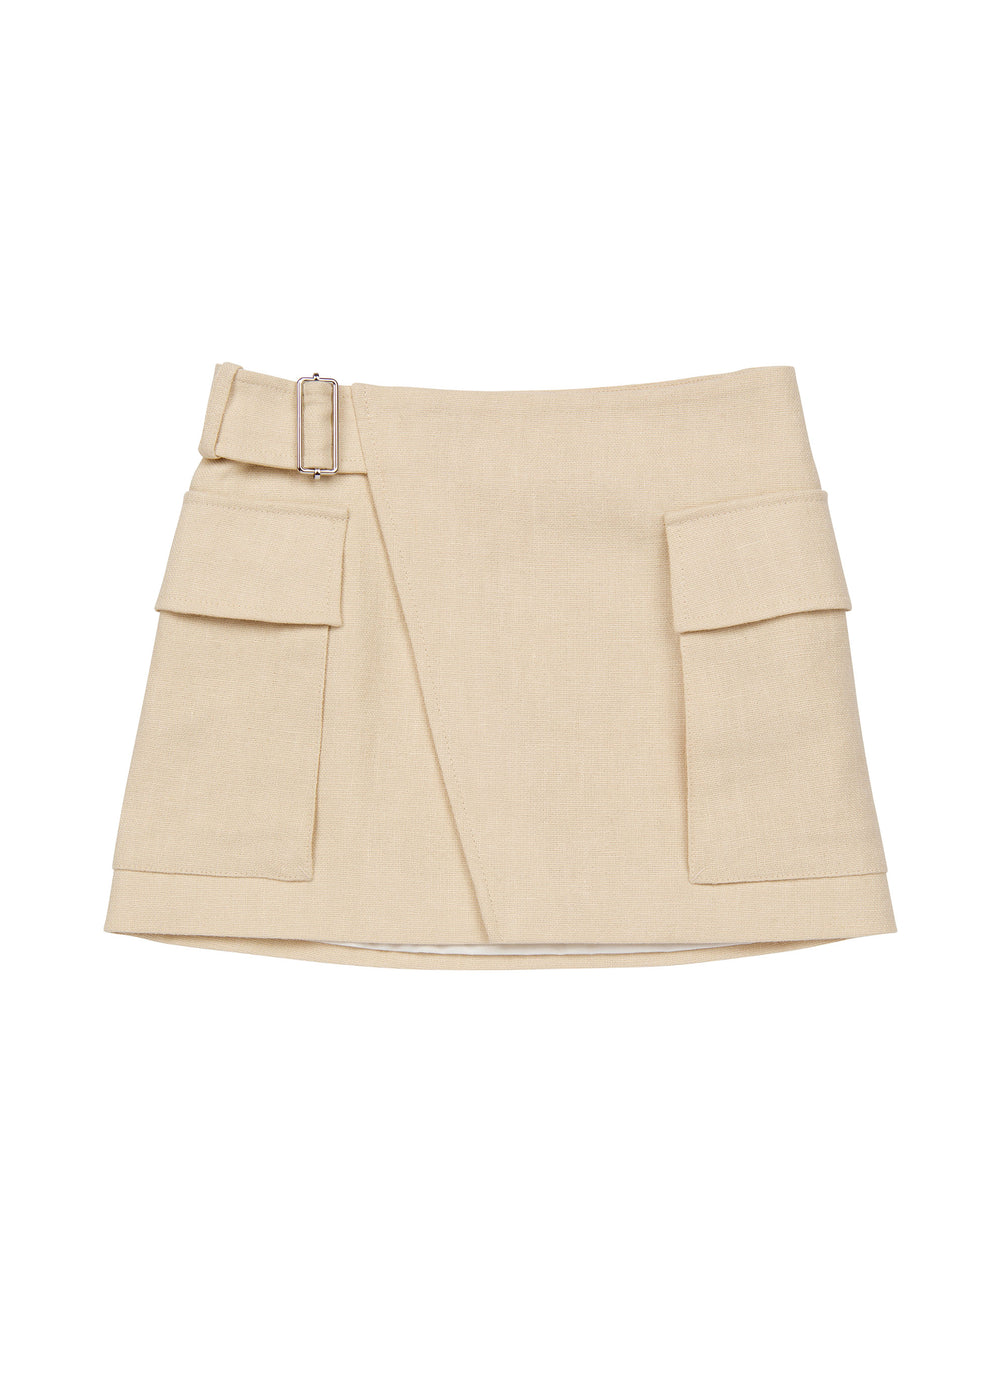 flatlay of beige wrap mini skirt with pockets